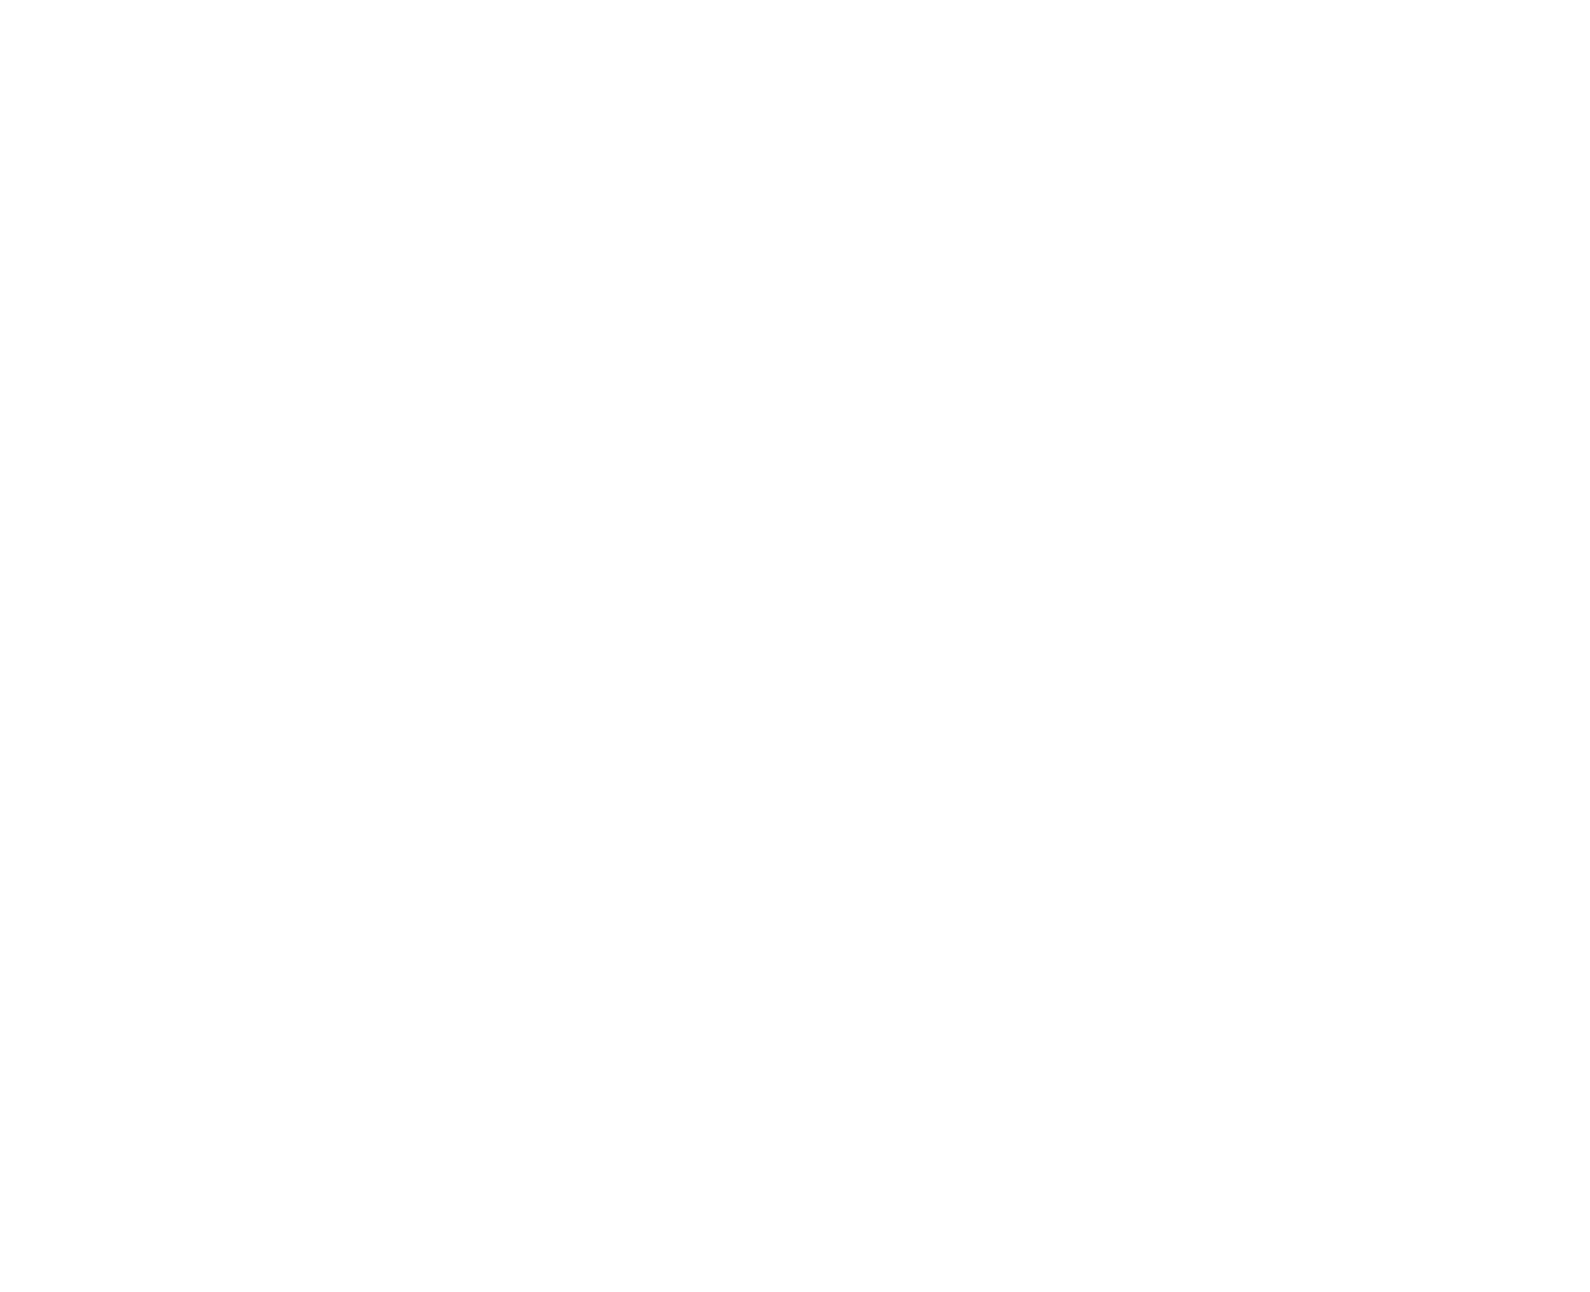 Disney Hall of Villains logo